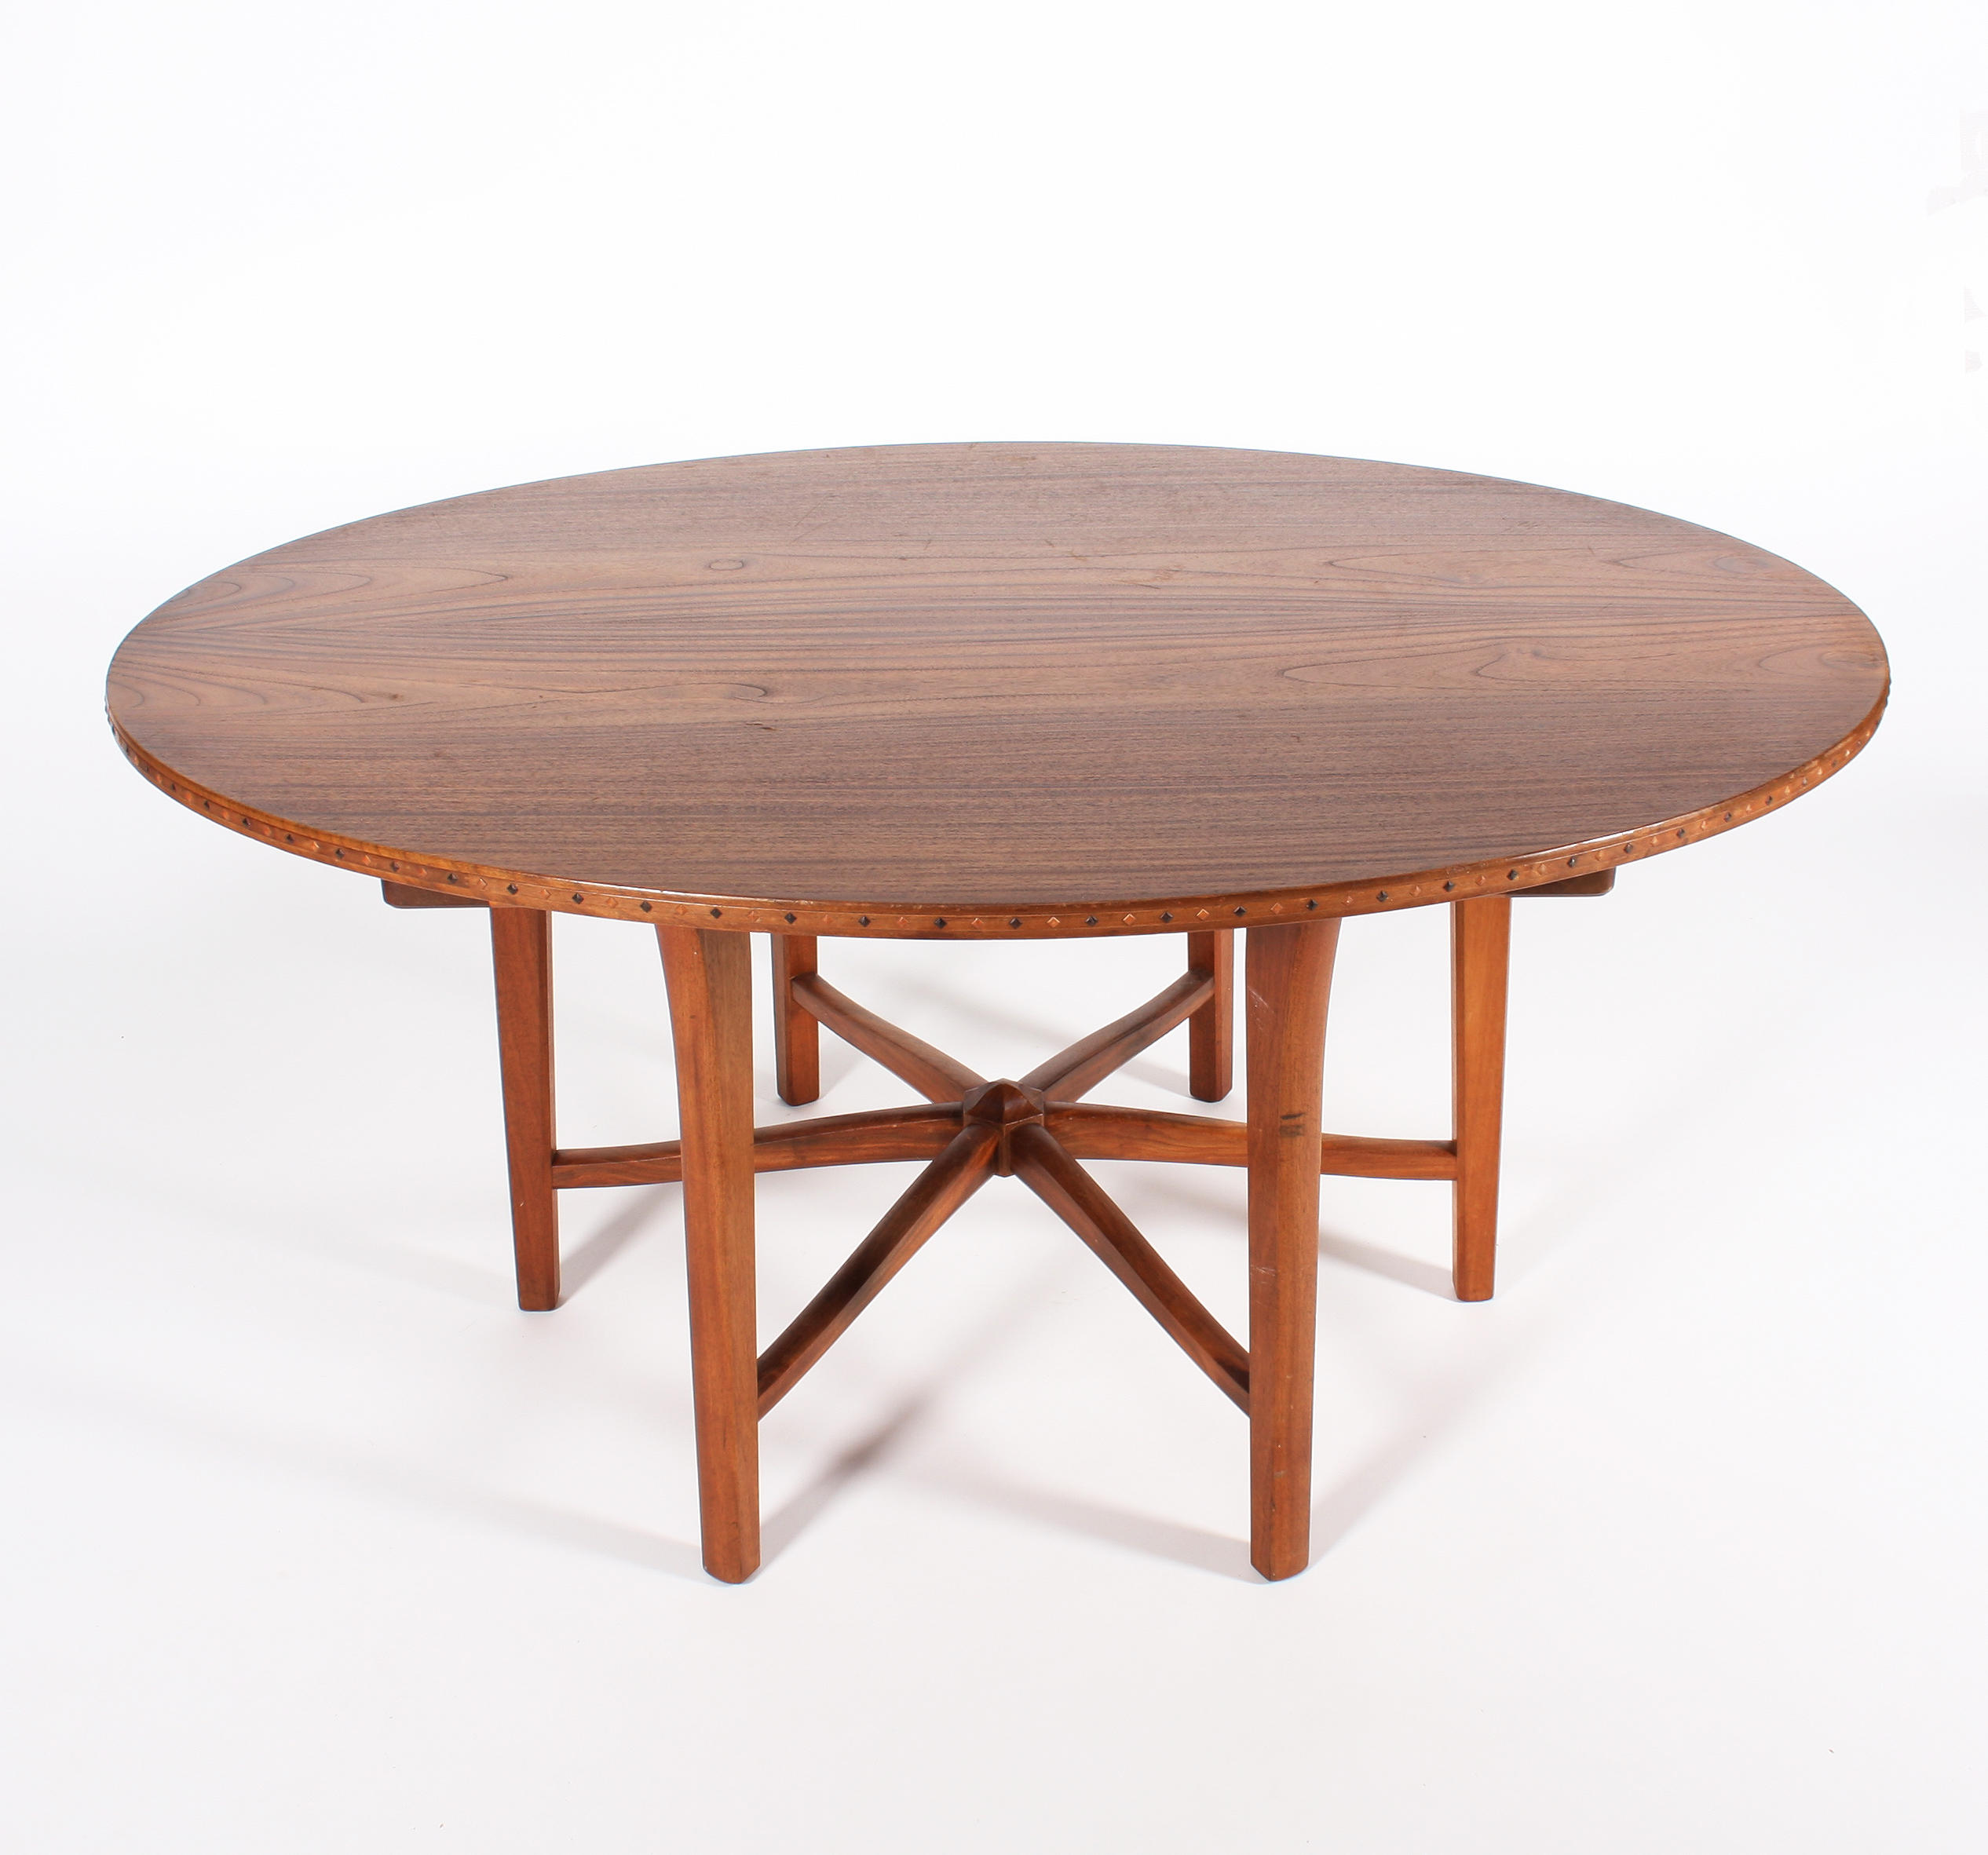 A mahogany dining table in the style of Hugh Birkett